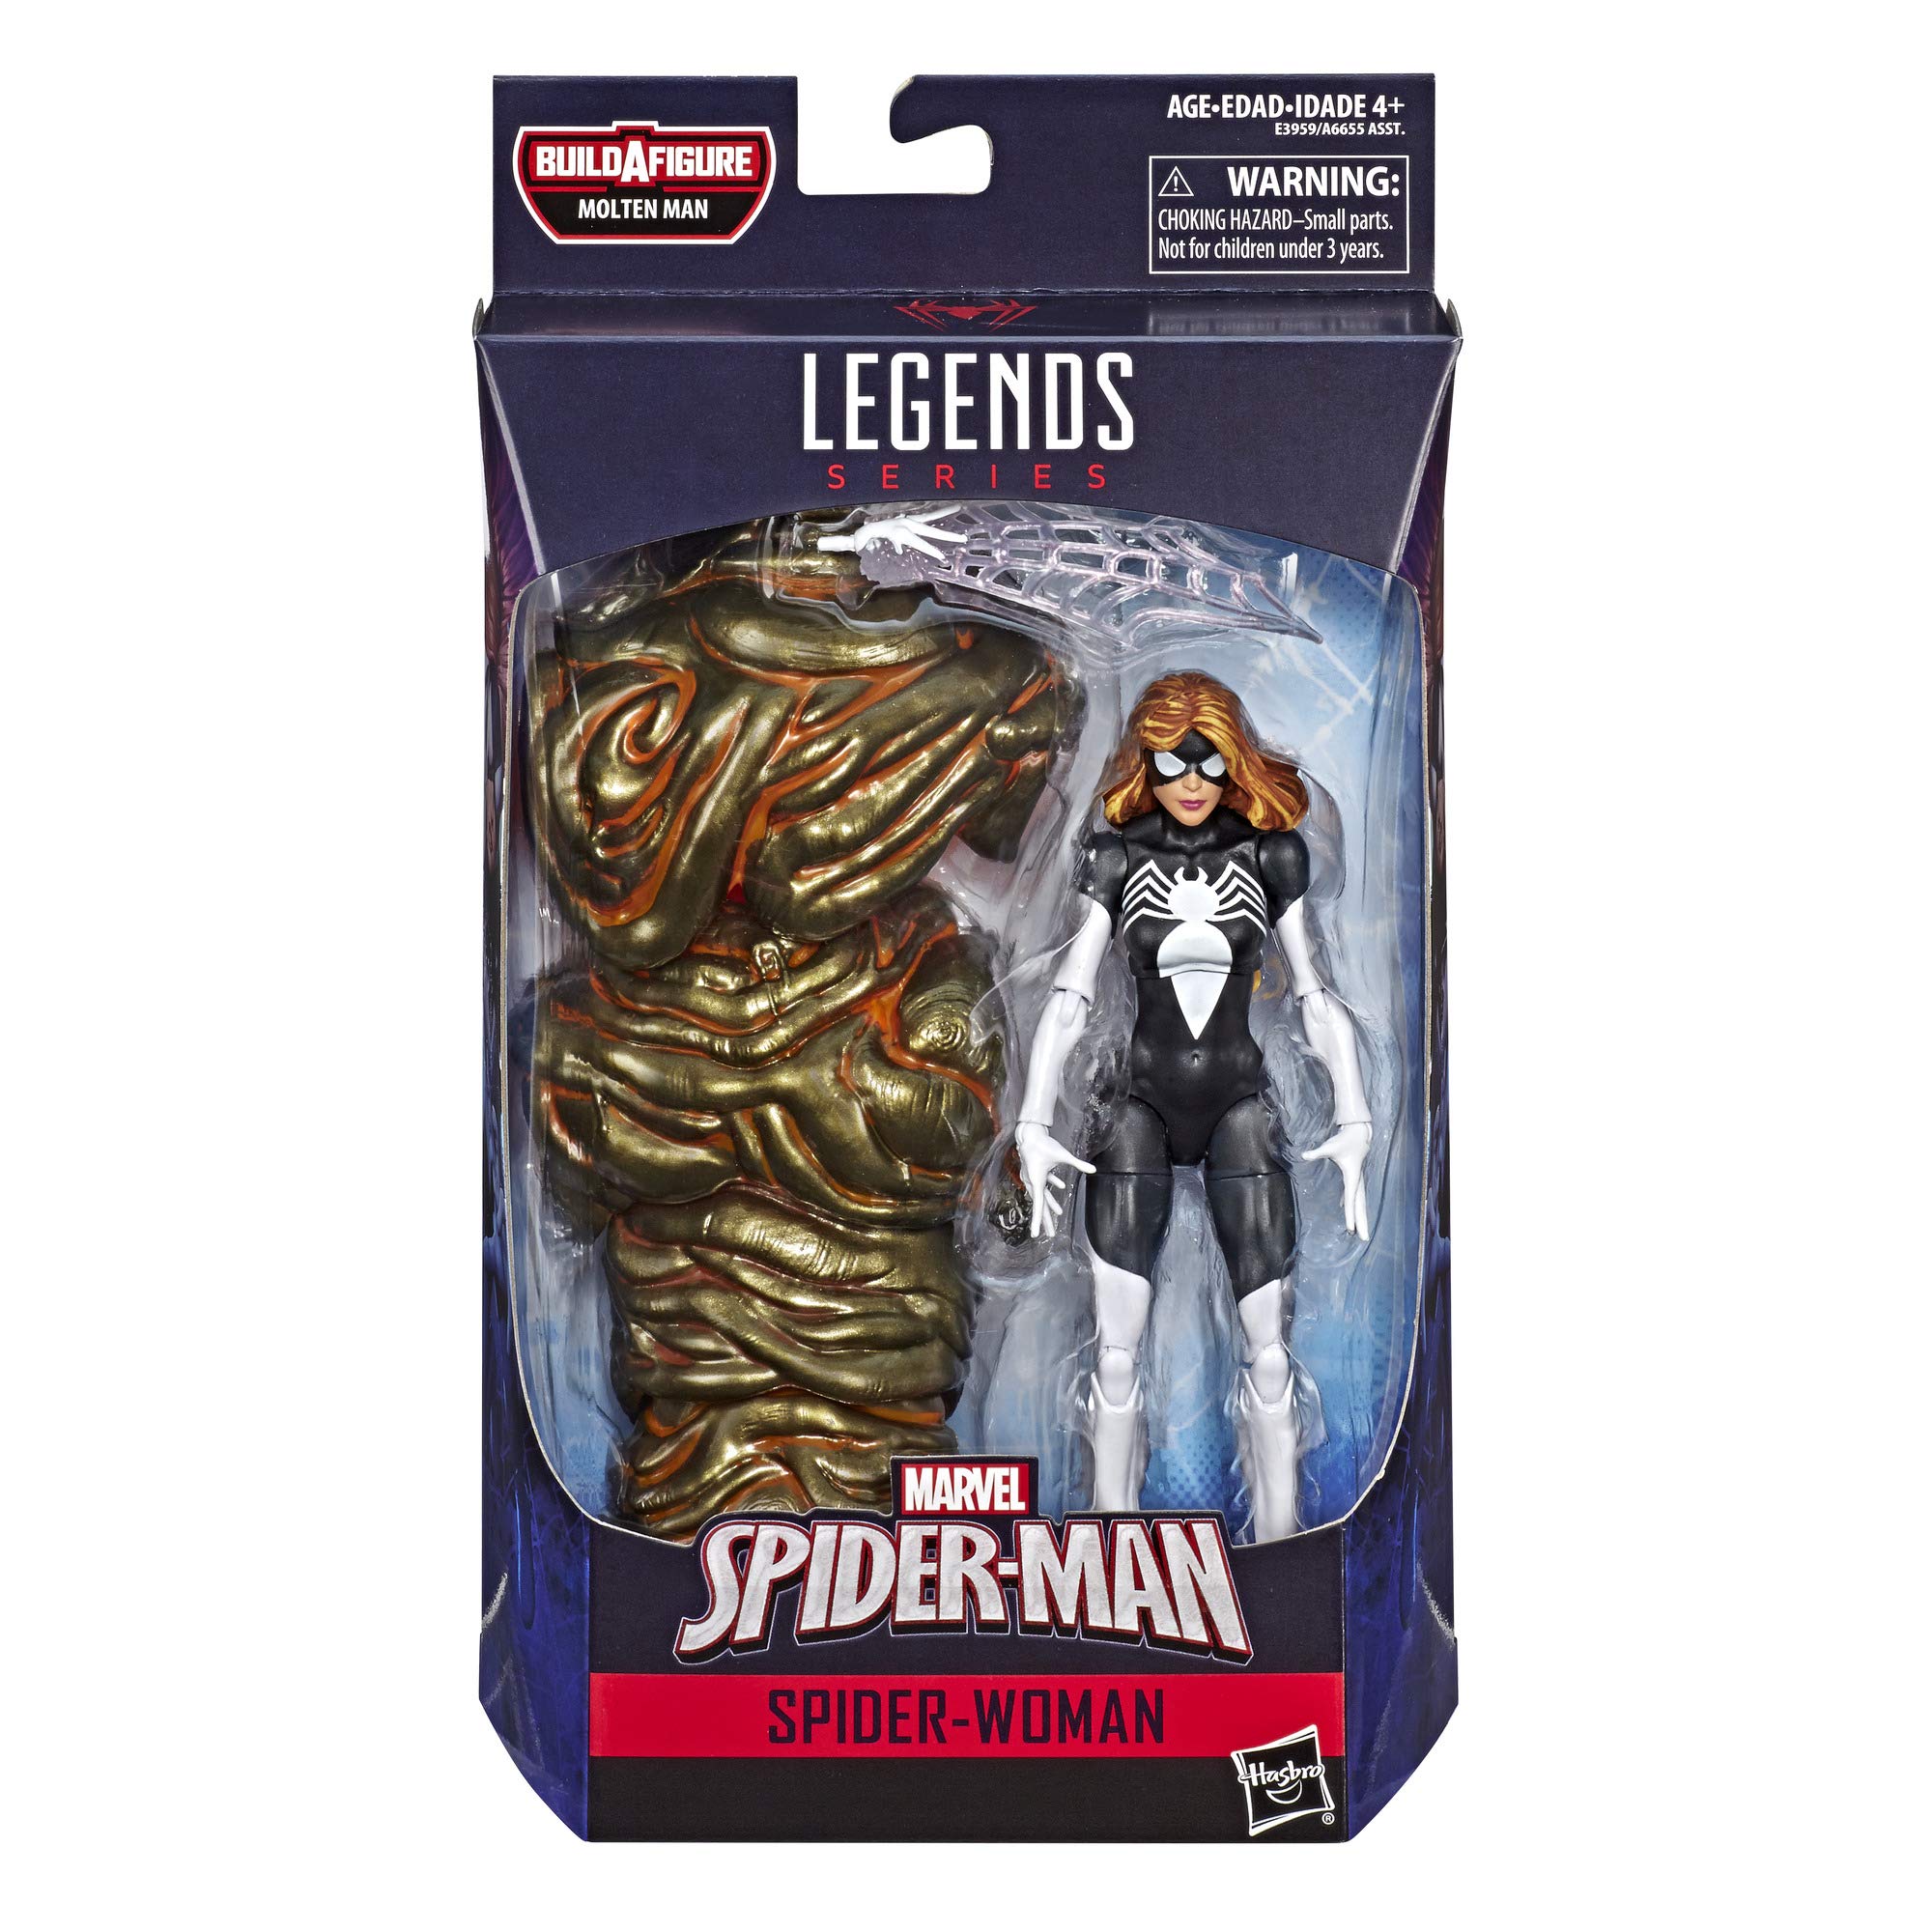 Spider-Man Marvel Legends Series 6